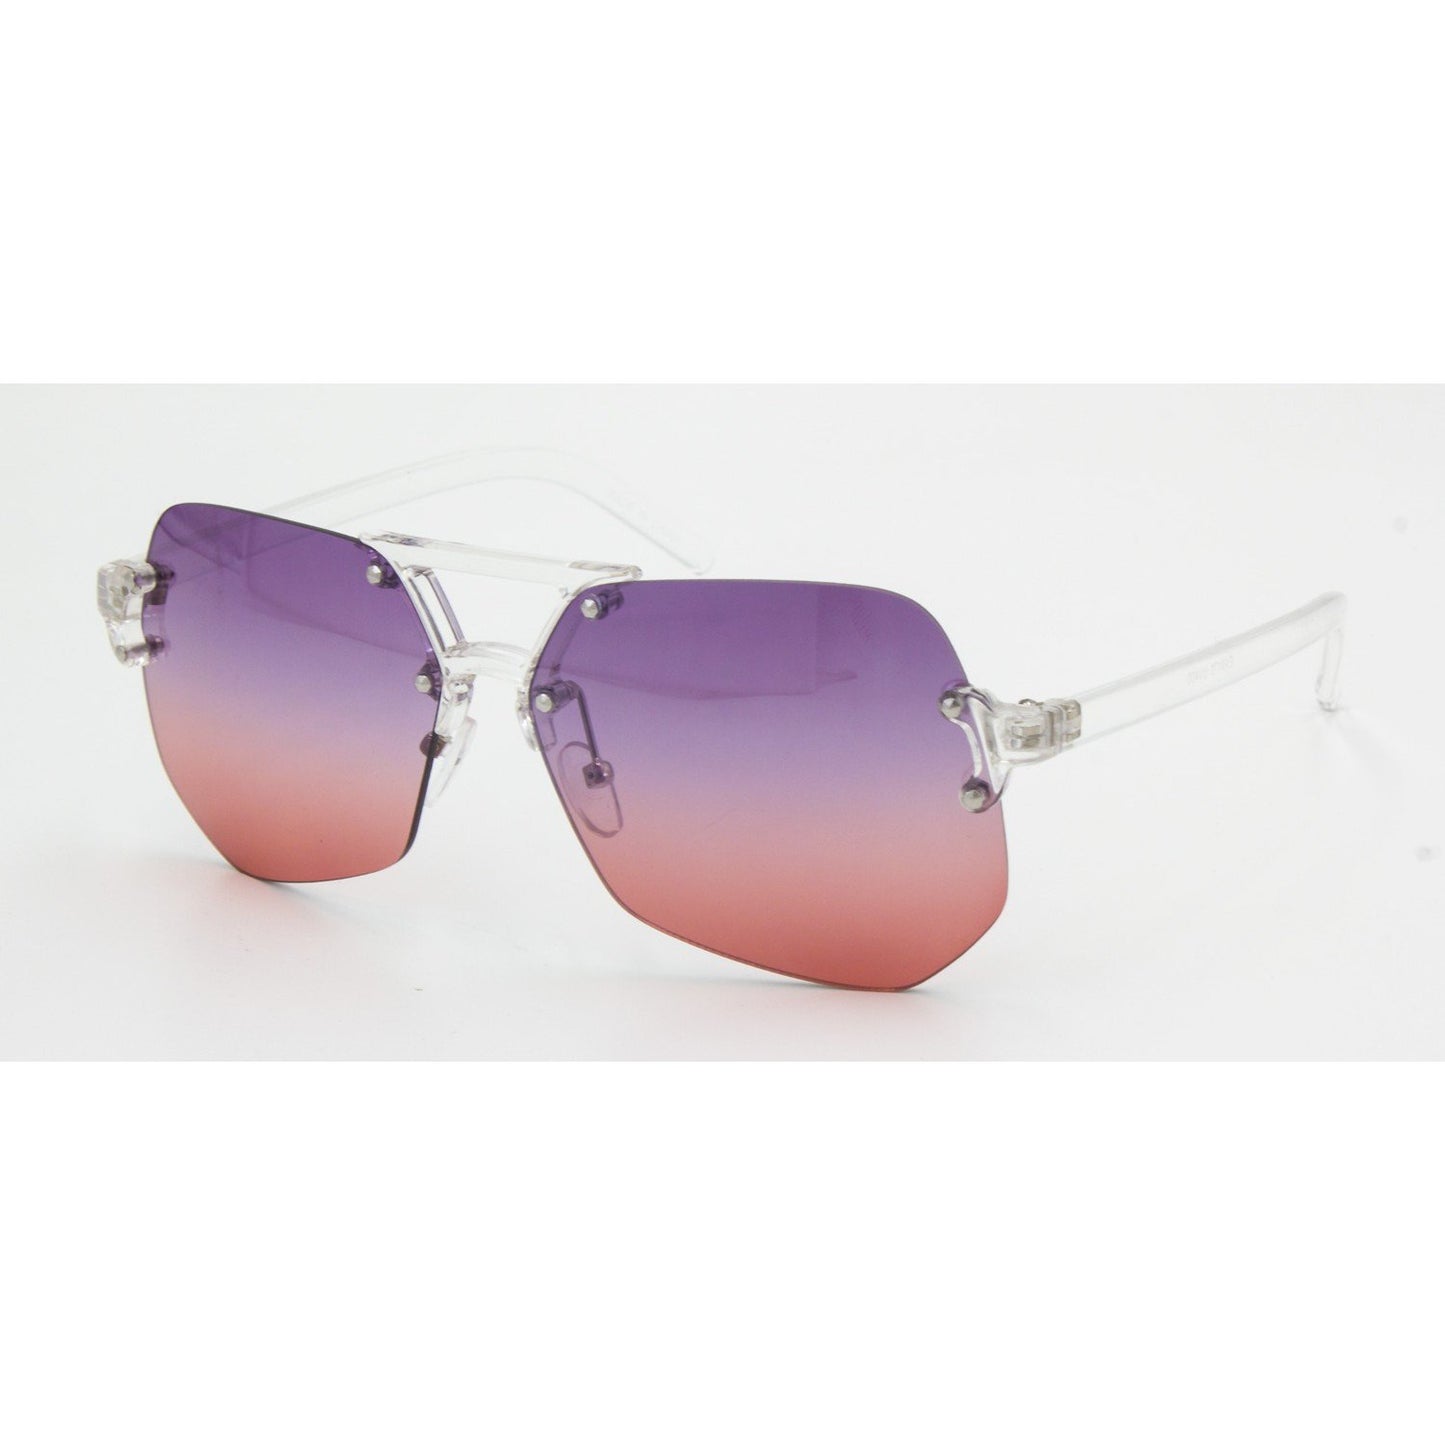 "Glam Girl" Rimless Sunglasses - Weekend Shade Sunglasses